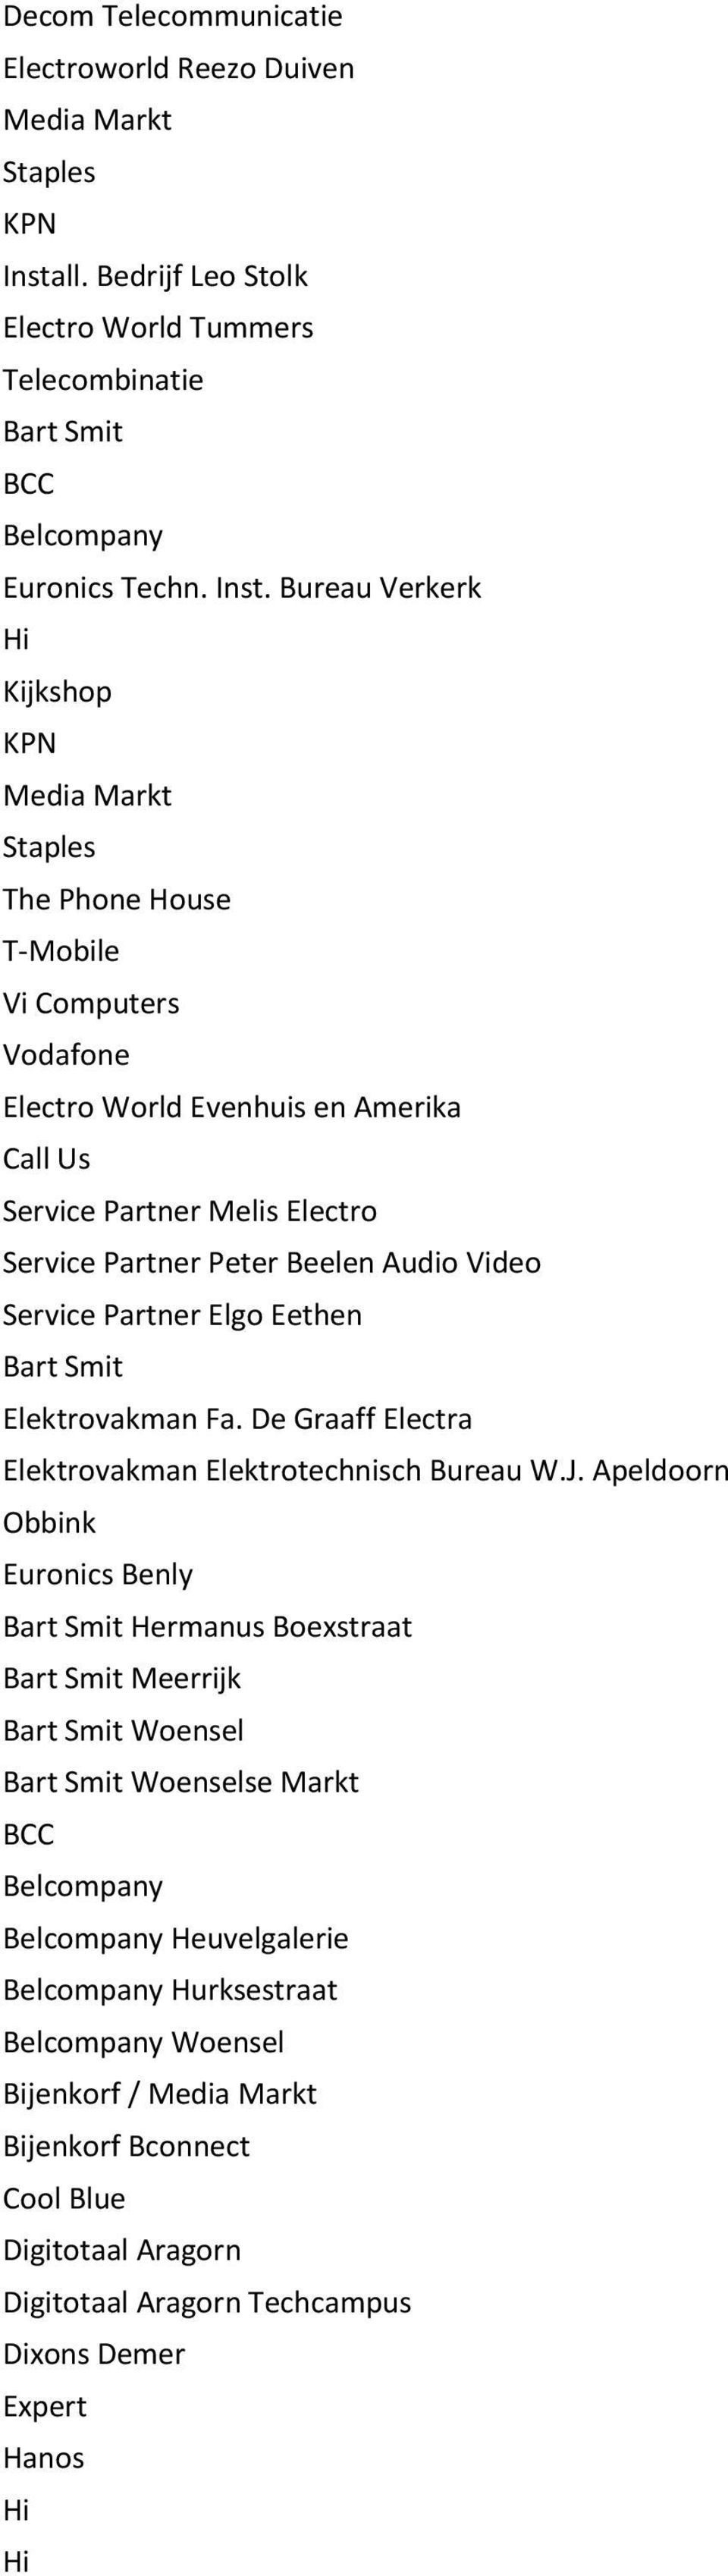 Bureau Verkerk Media Markt Staples Vi Computers Electro World Evenhuis en Amerika Call Us Service Partner Melis Electro Service Partner Peter Beelen Audio Video